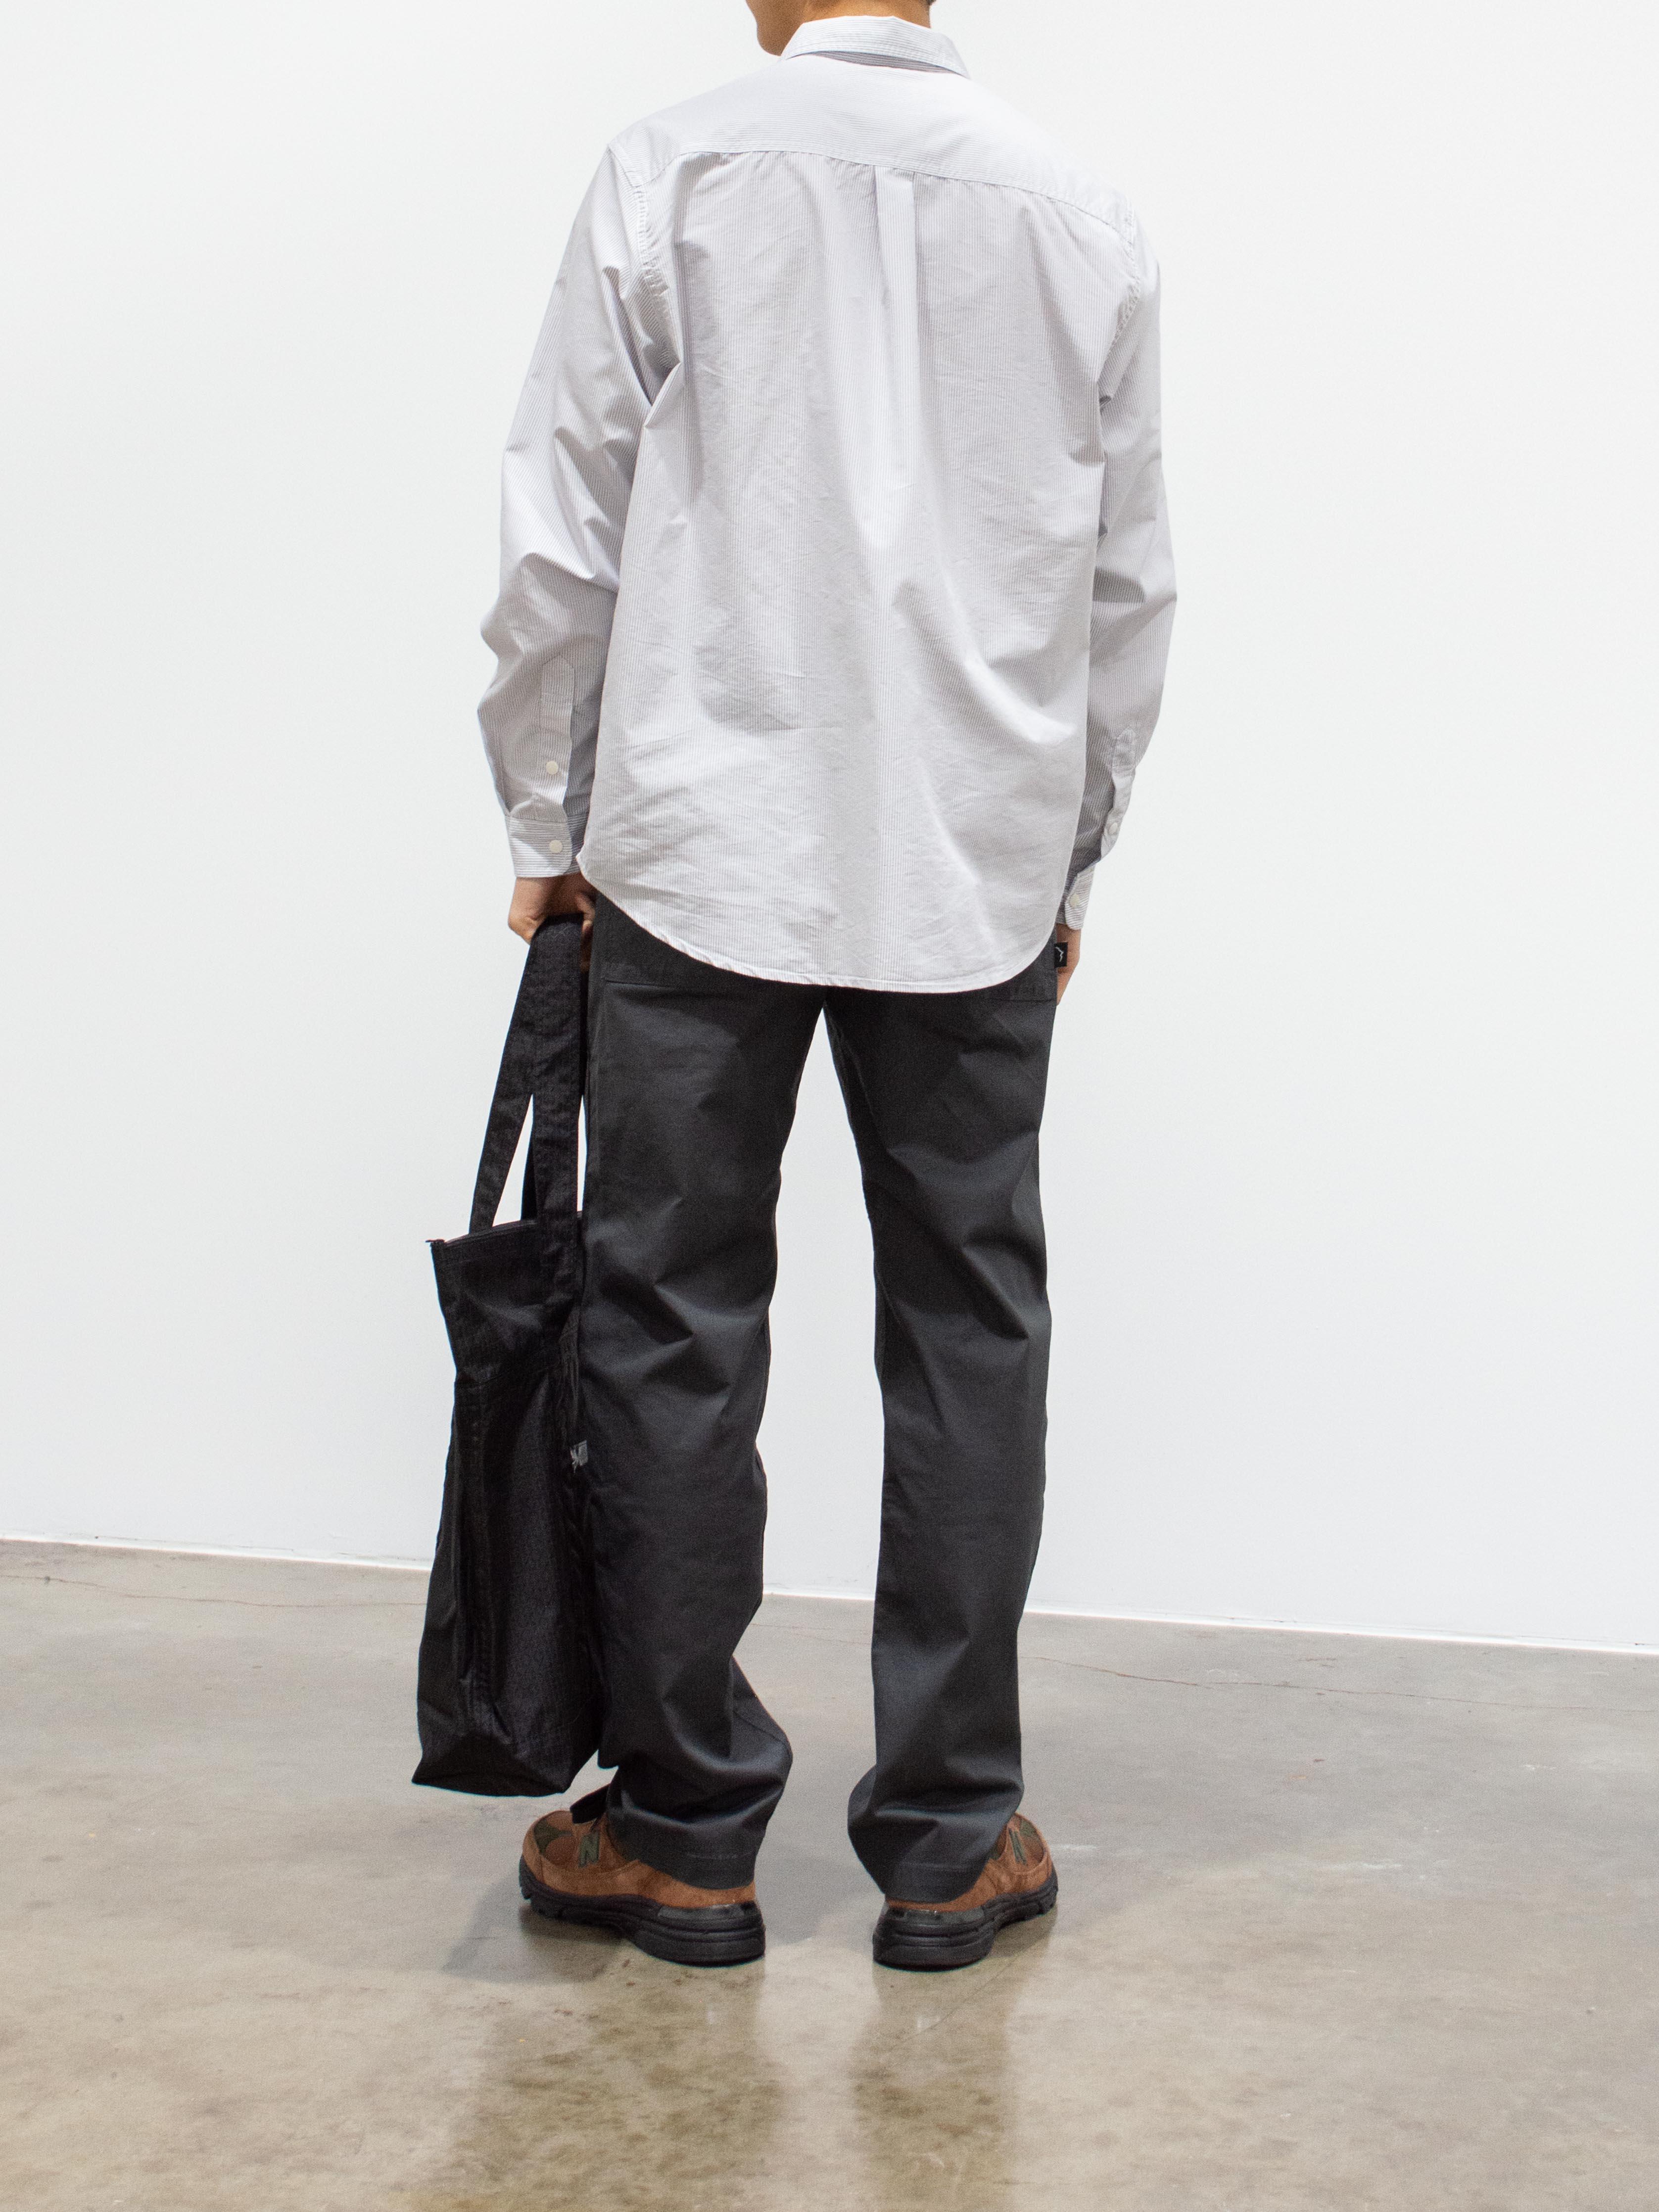 Namu Shop - CAYL Double Pocket Hiker Shirt - Gray Stripe